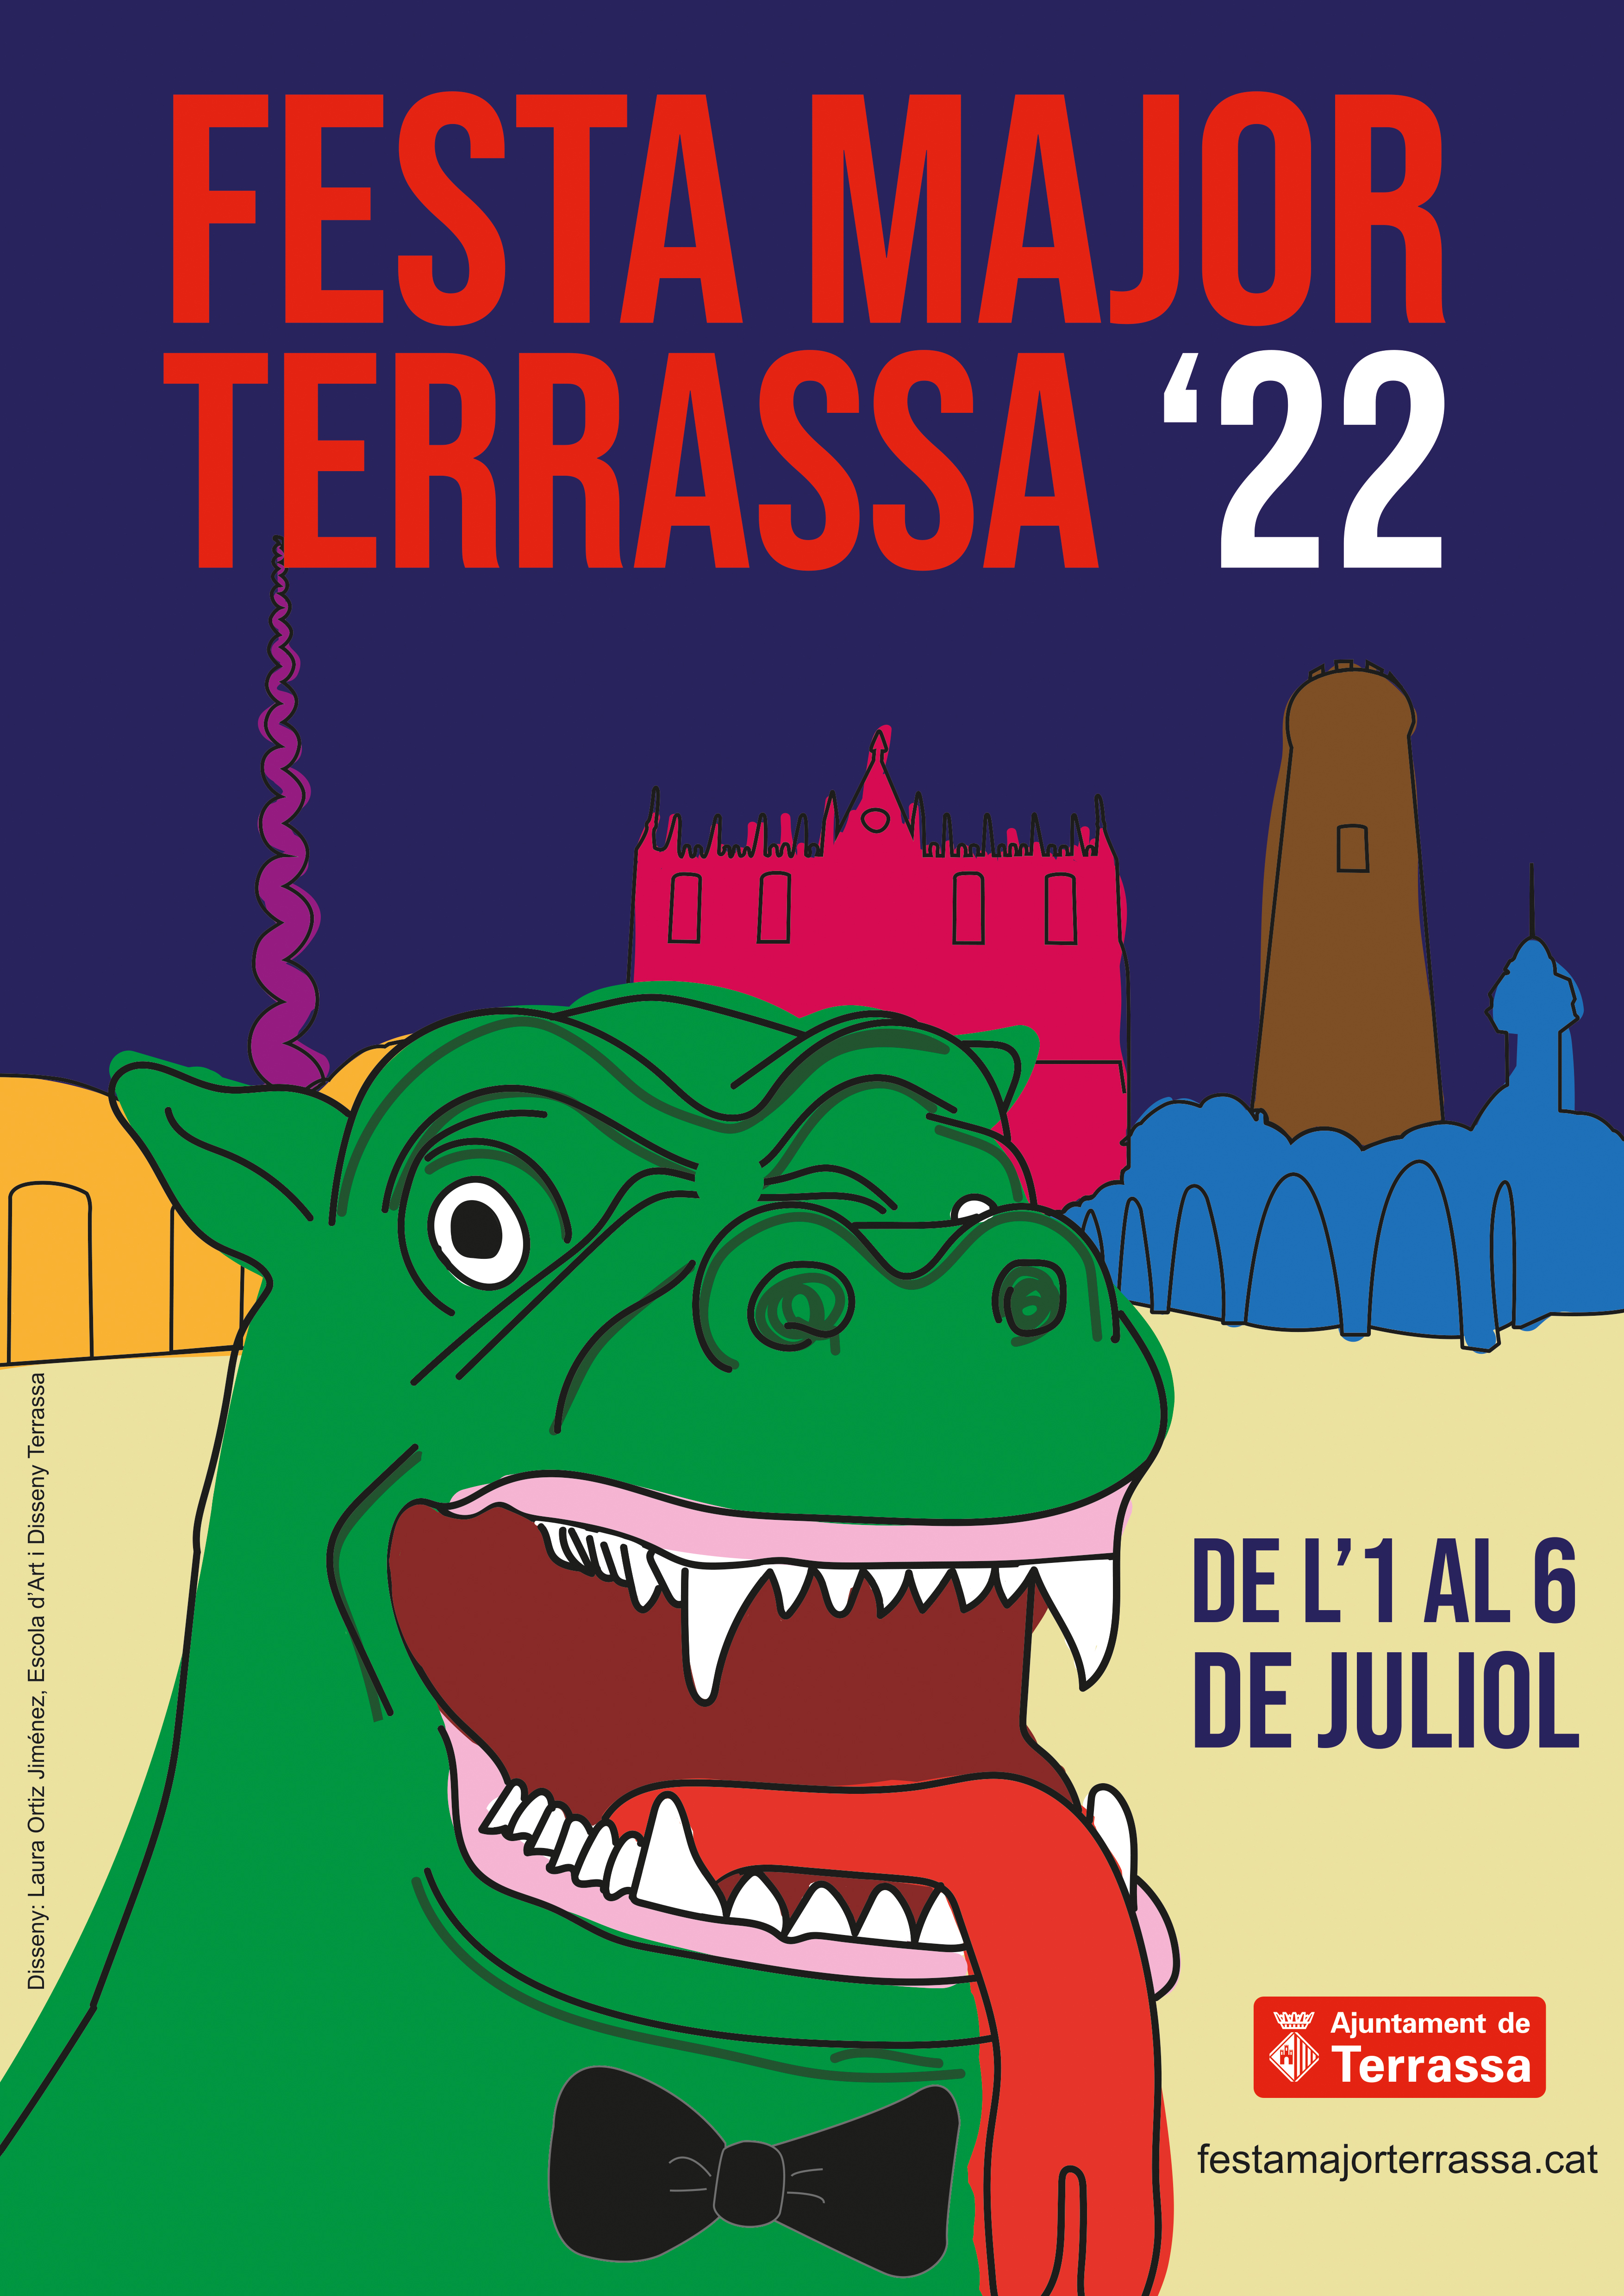 Cartell de la Festa Major. Autora: Laura Ortiz Jiménez